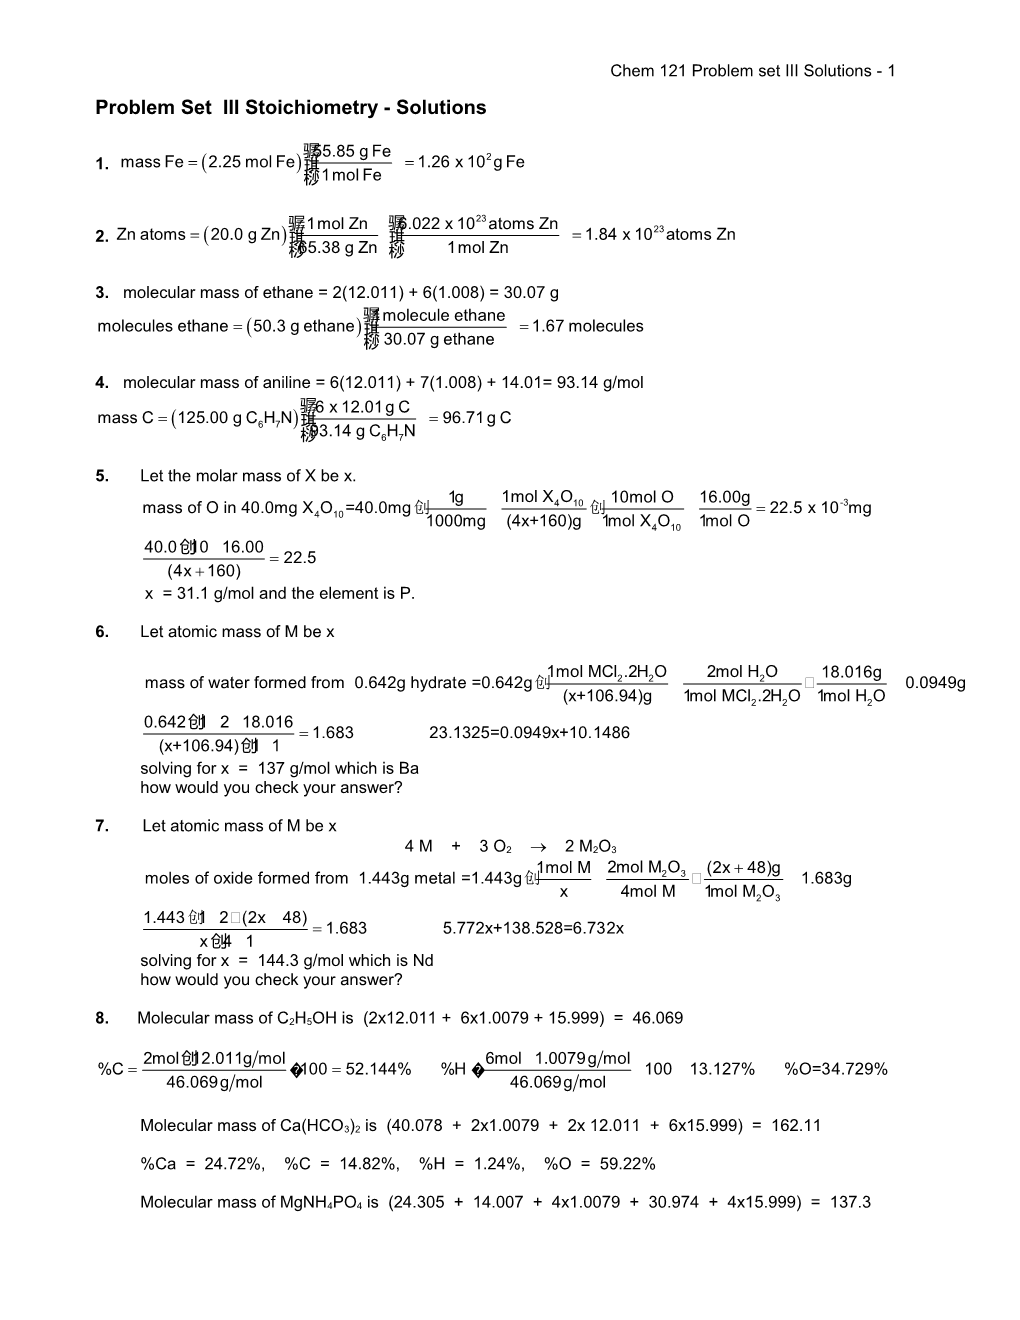 Chem 112, Answers to Problem Set II